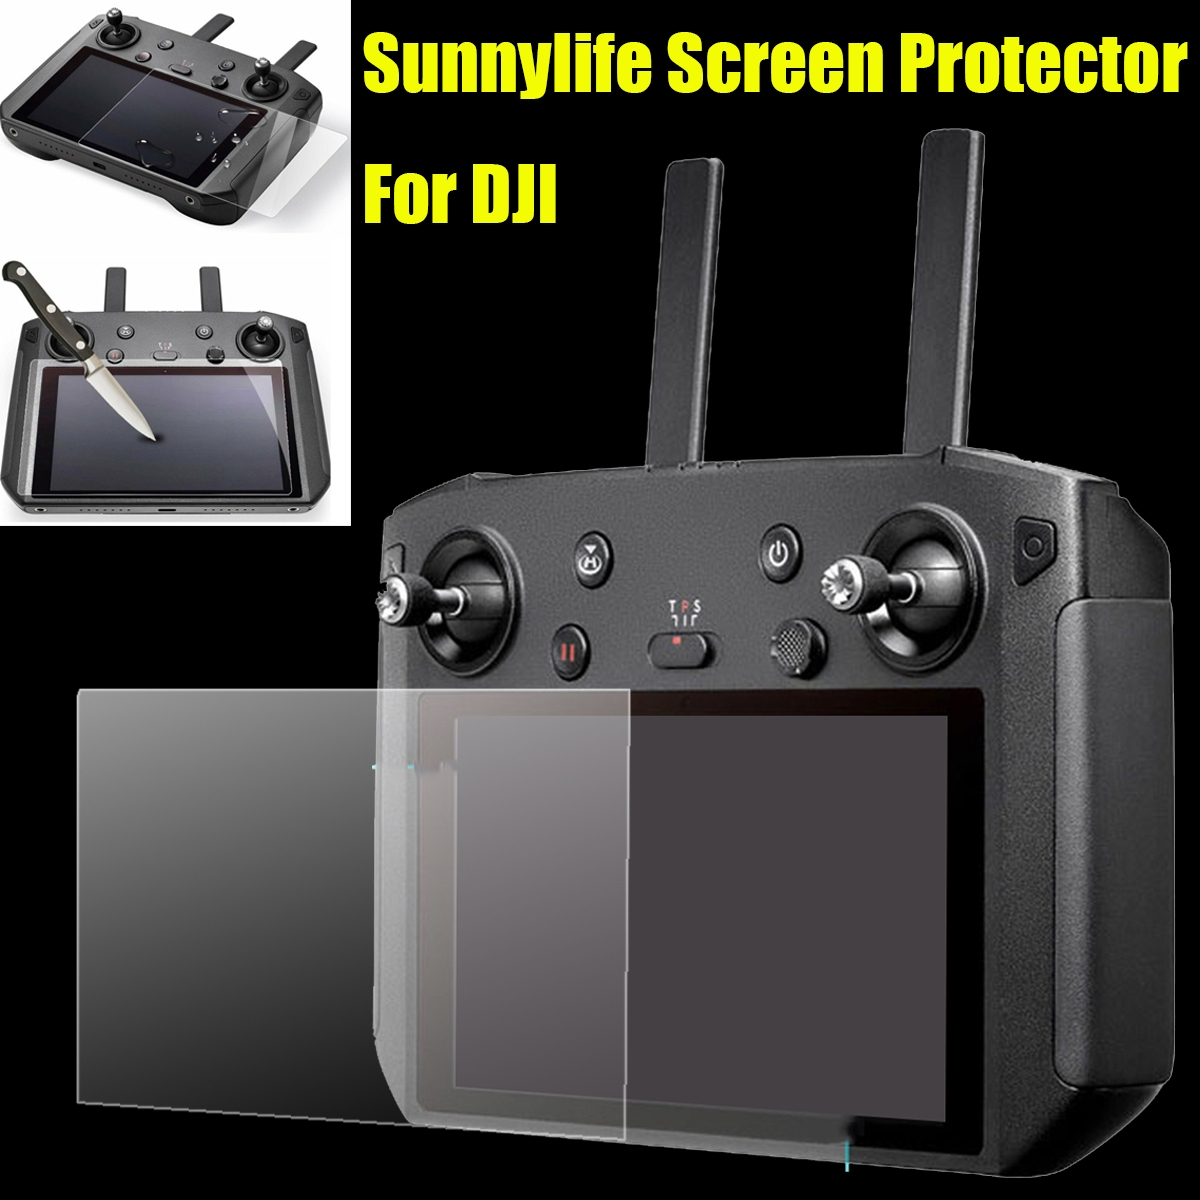 Sunnylife Controller Skyddskyddsfilm för DJI Smart Remote Controller